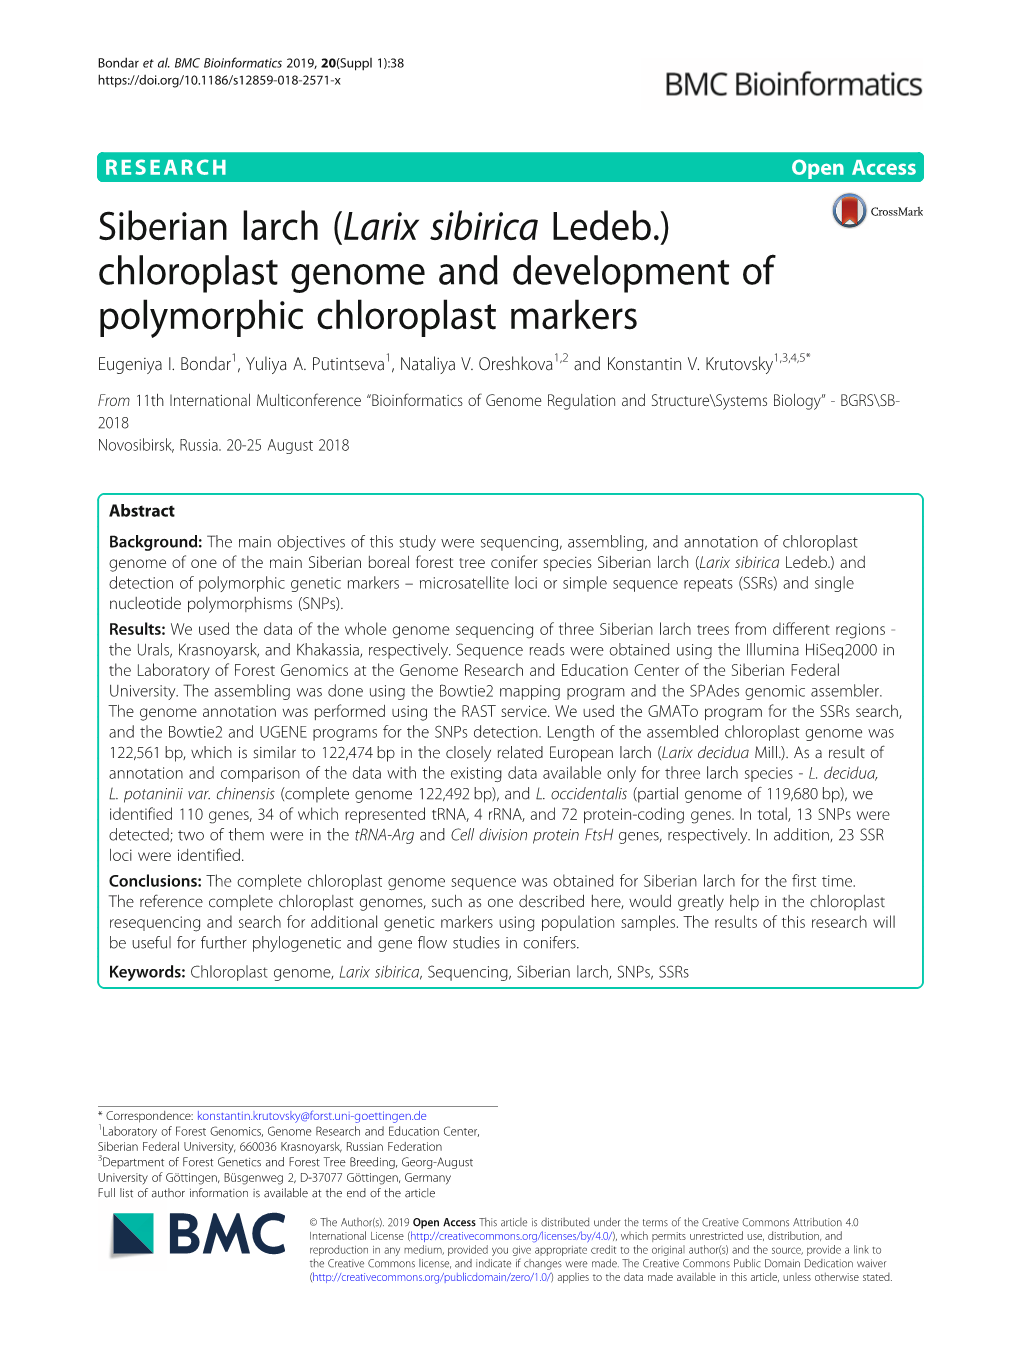 Siberian Larch (Larix Sibirica Ledeb.) Chloroplast Genome and Development of Polymorphic Chloroplast Markers Eugeniya I